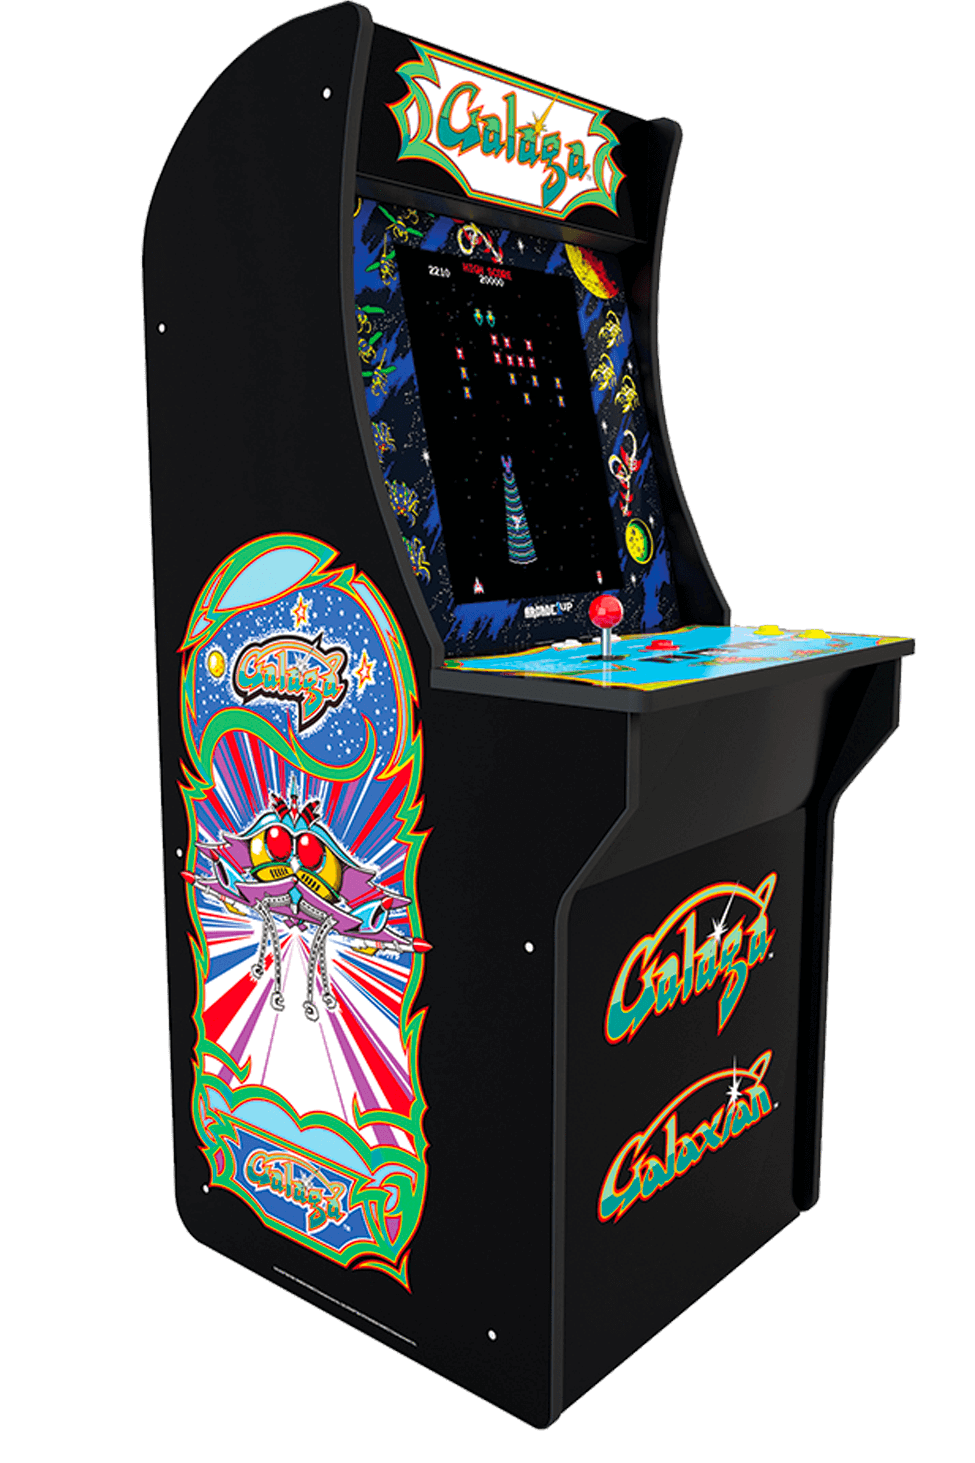 Galaga Arcade Cabinet Dimensions Sam Ace Com